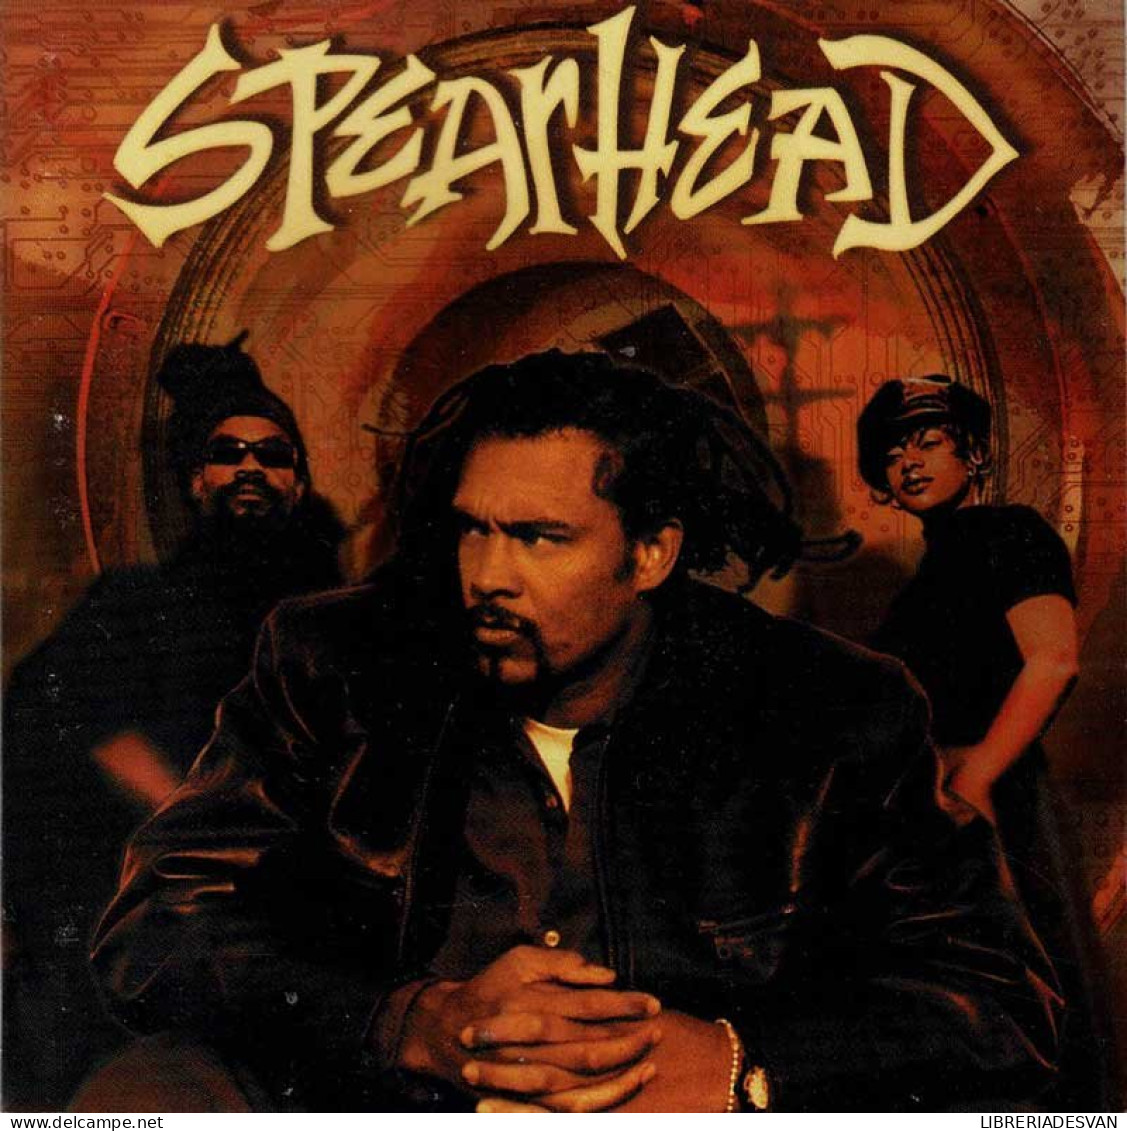 Spearhead - Chocolate Supa Highway. CD - Rap & Hip Hop